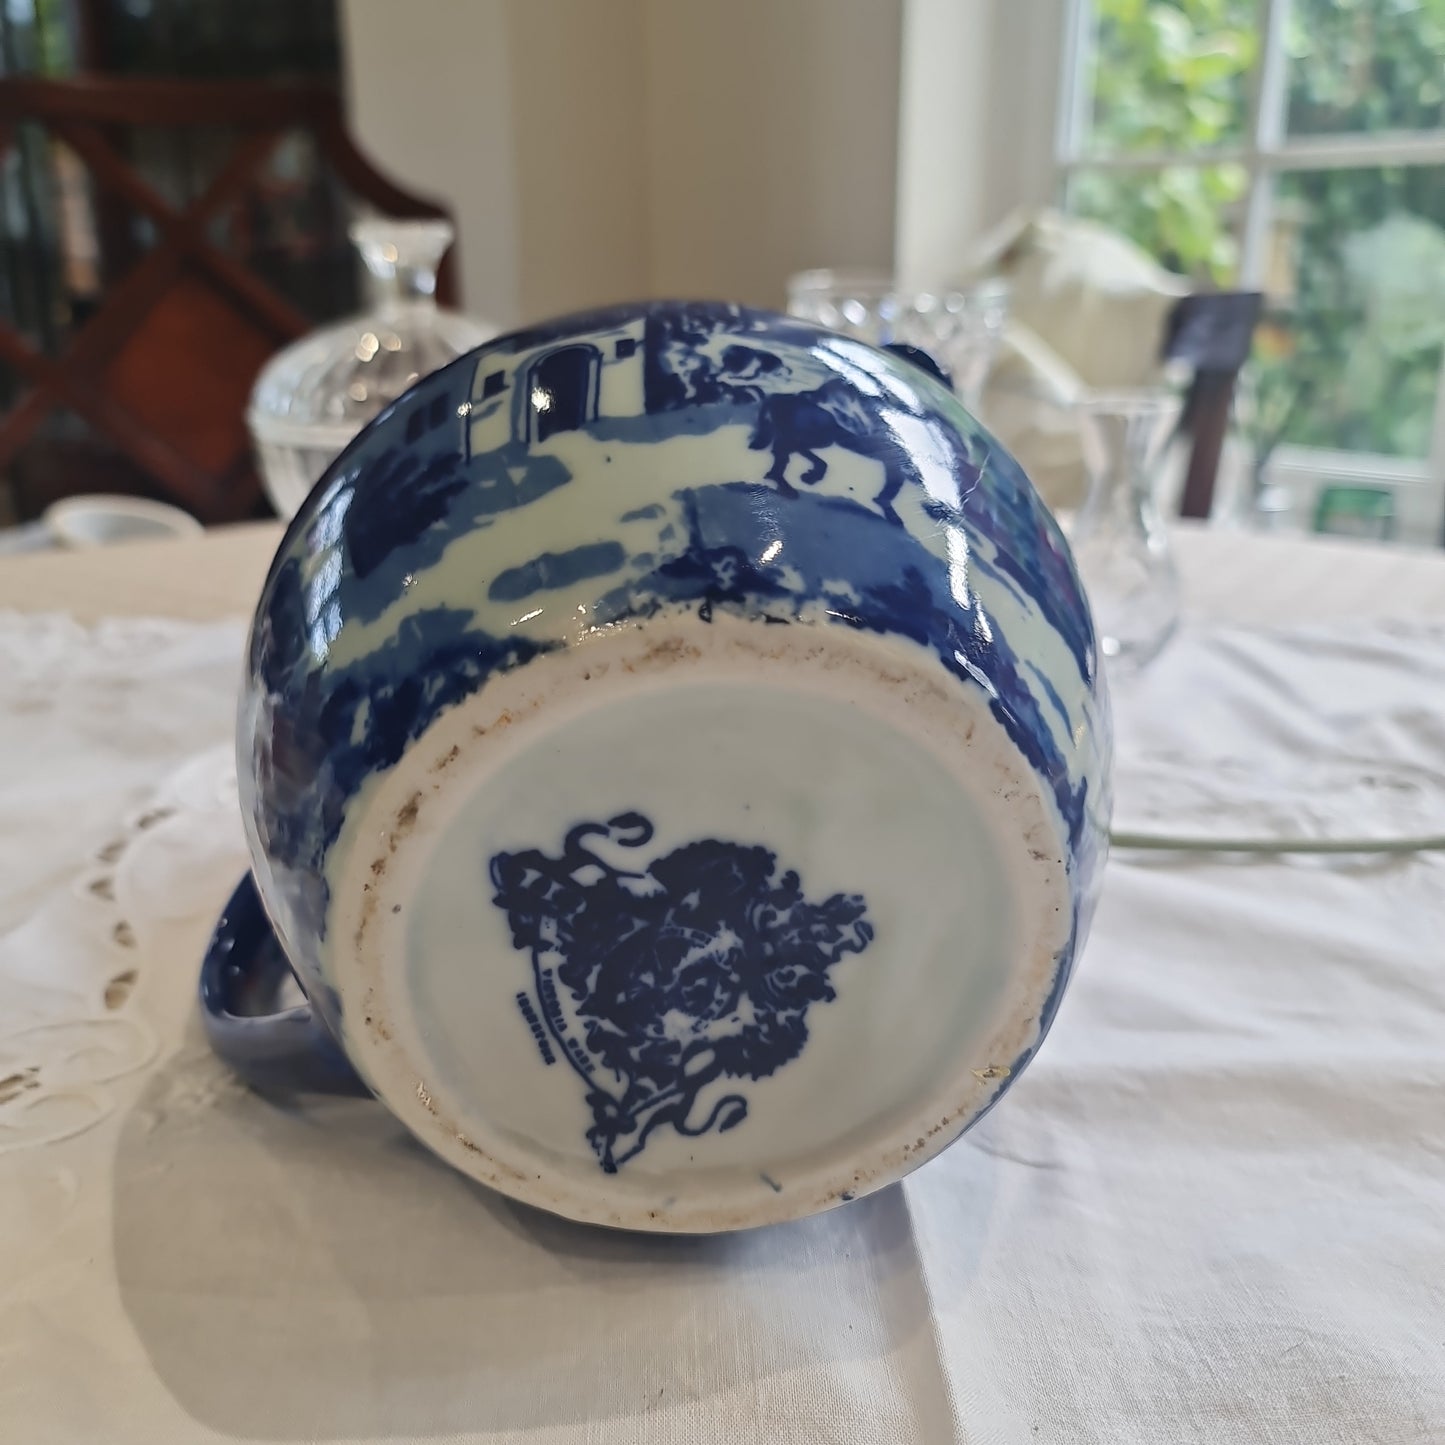 Vintage ironstone blue and white jug